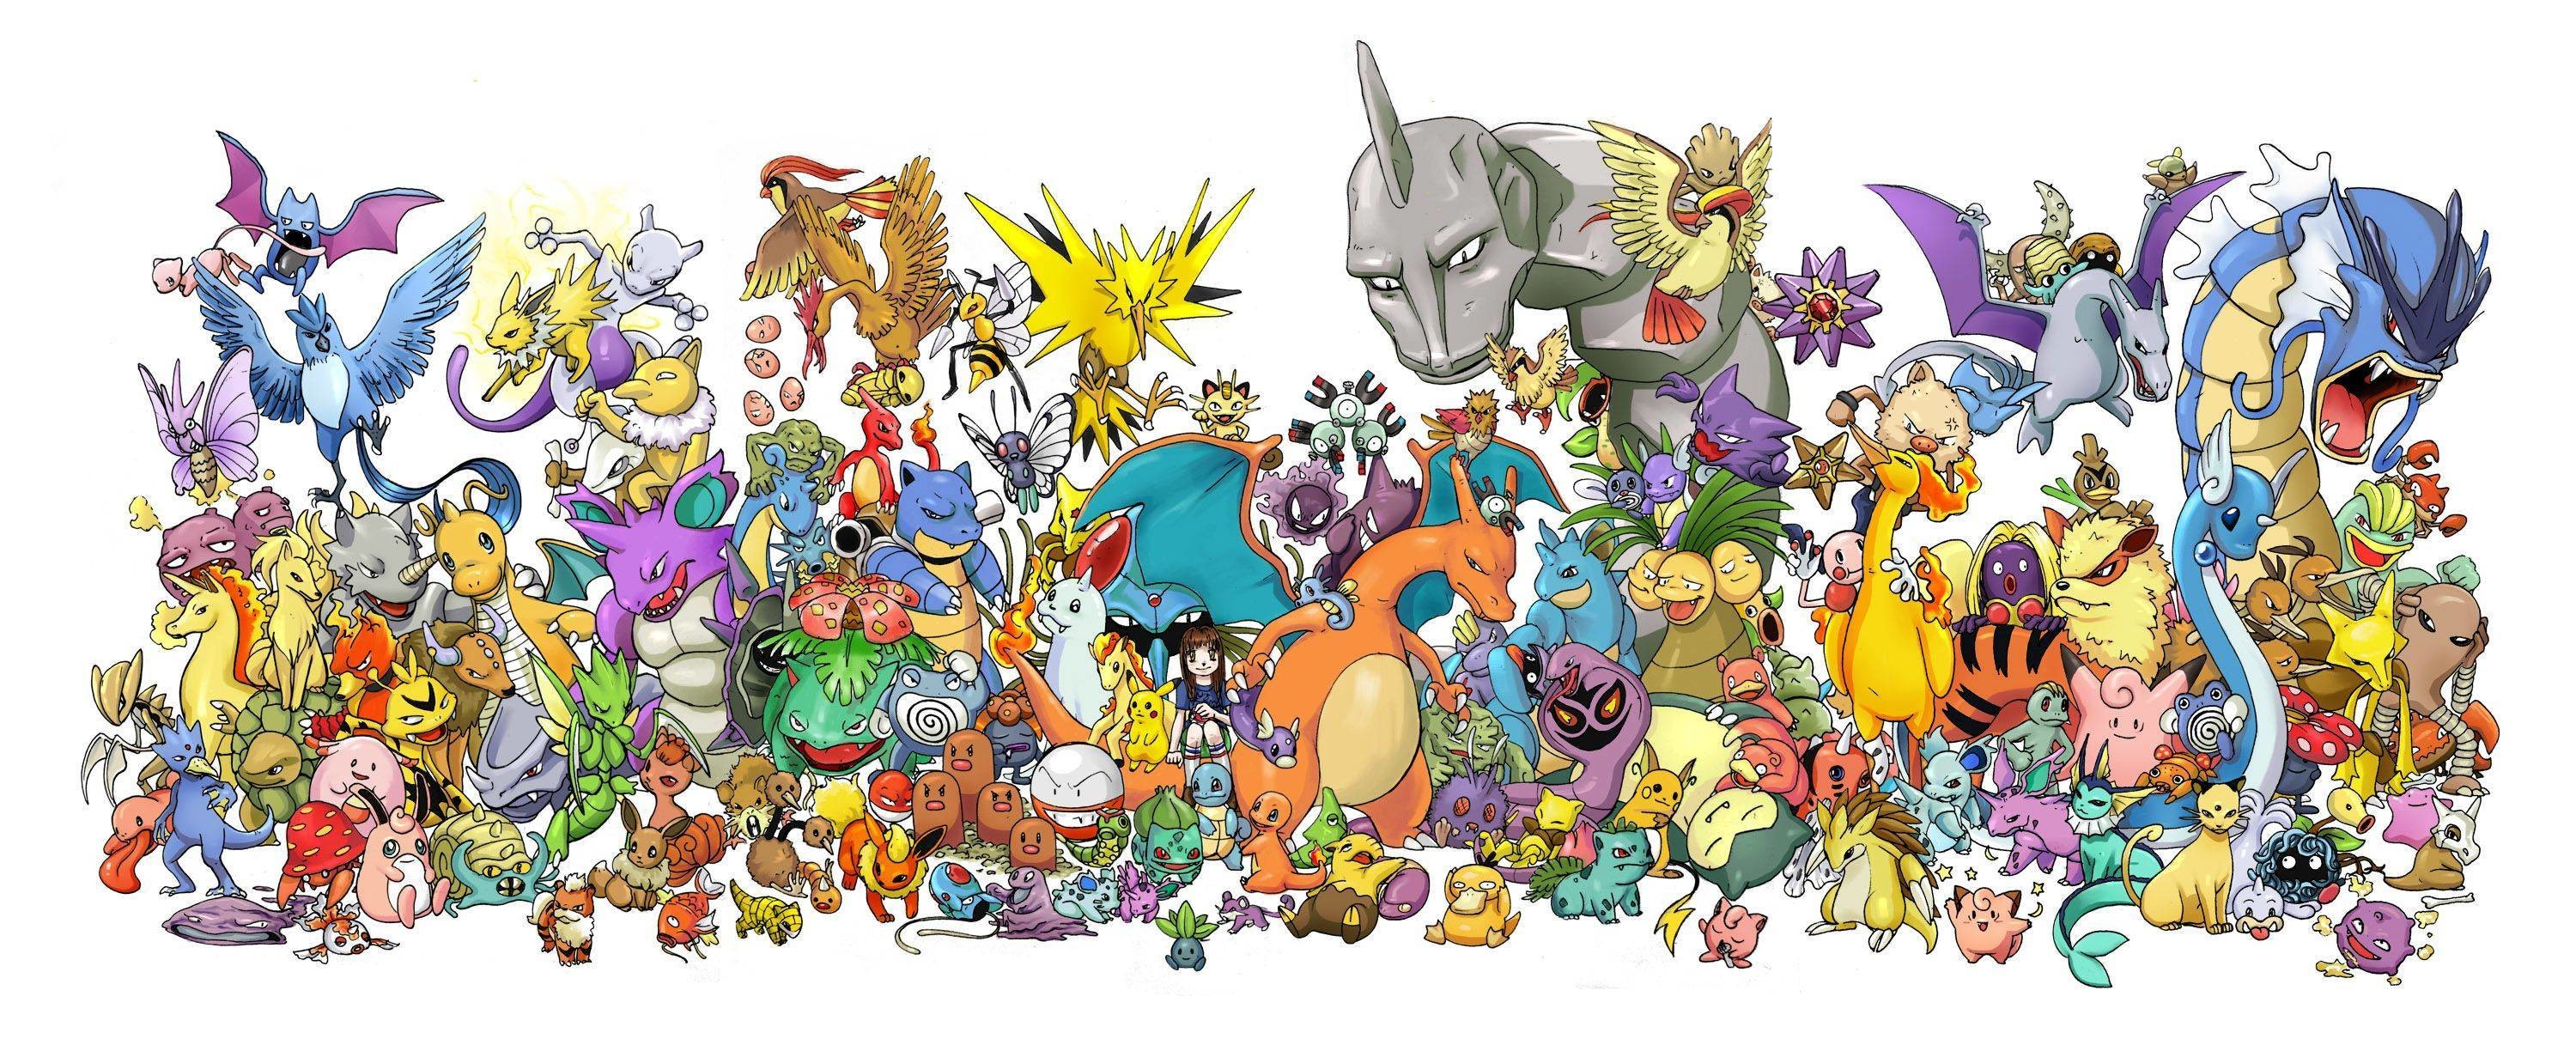 Original Pokemon Wallpaper Pokemon Legendary Rayquaza Shiny